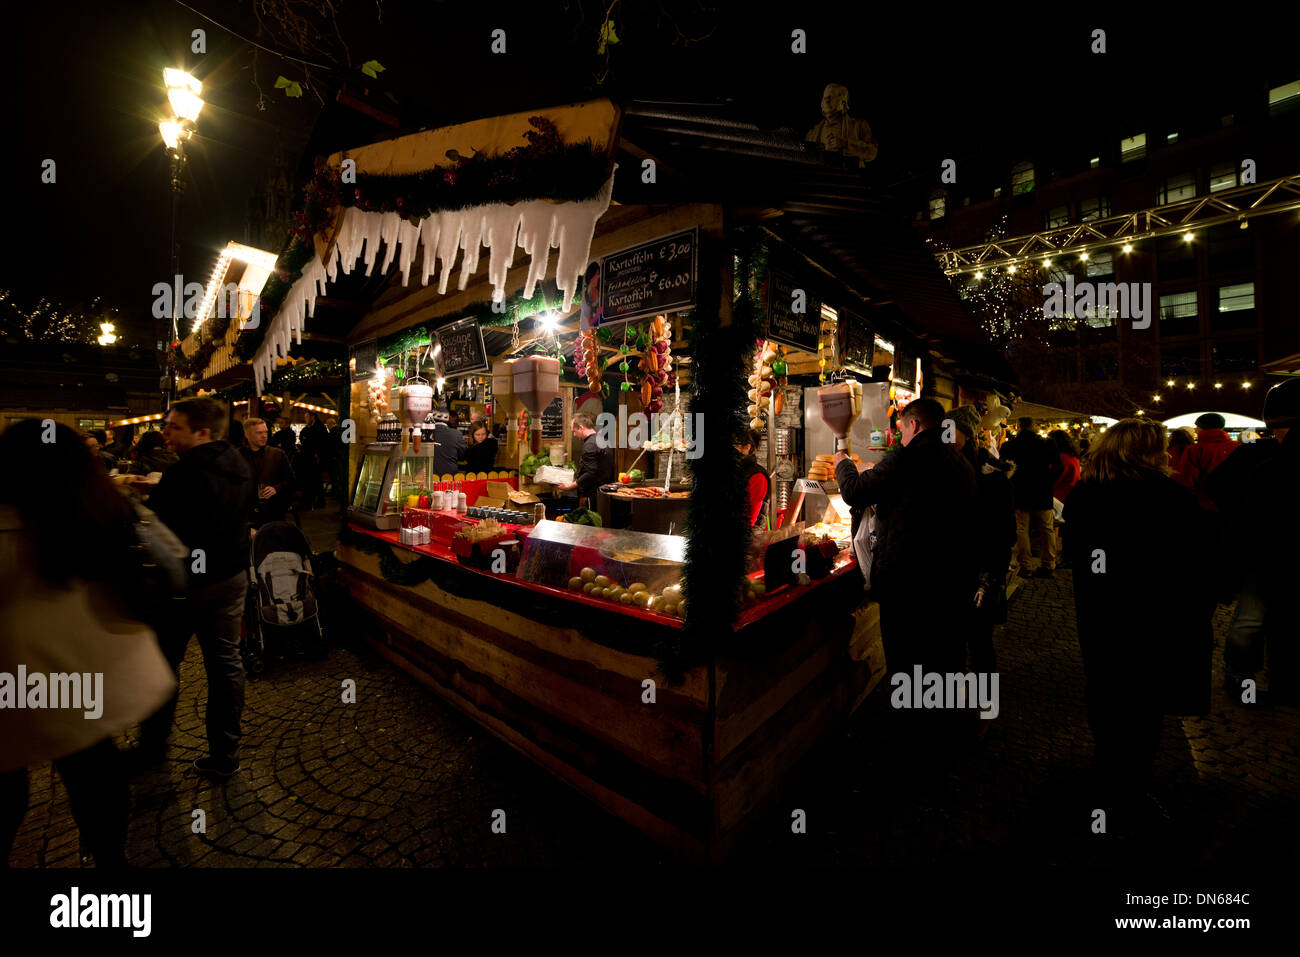 Manchester, Christmas, market, stall, 2013, night, European, German, Italian, winter, December, England, EU, commerce, business, Stock Photo